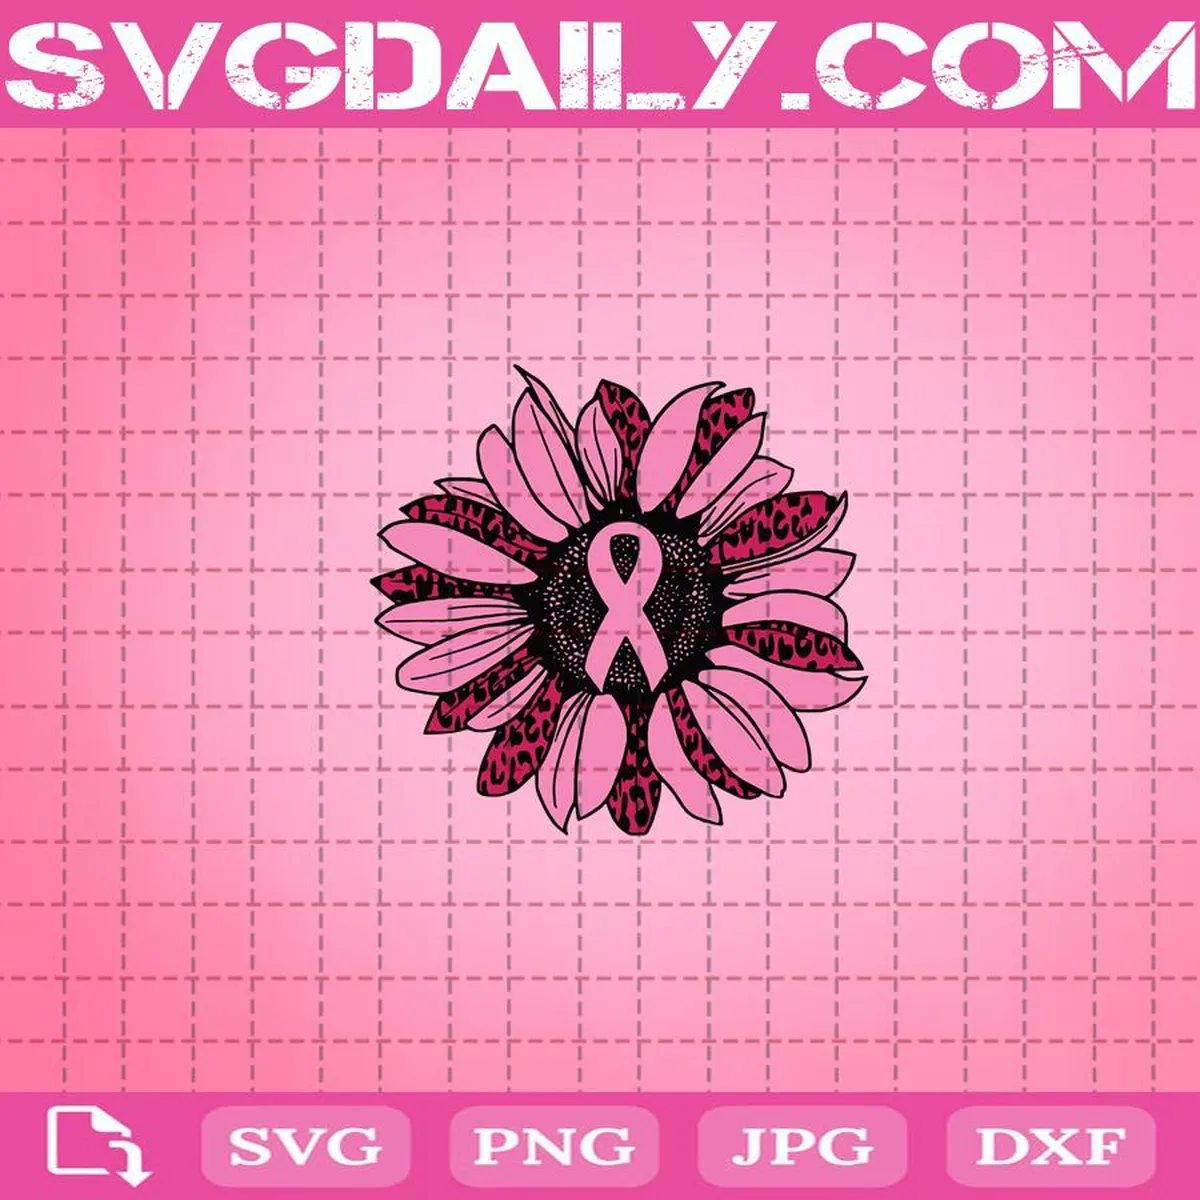 Leopard Sunflower Ribbon Breast Cancer Awareness Svg, Sunflower Svg, Breast Cancer Svg, Sunflower Pink Leopard Svg